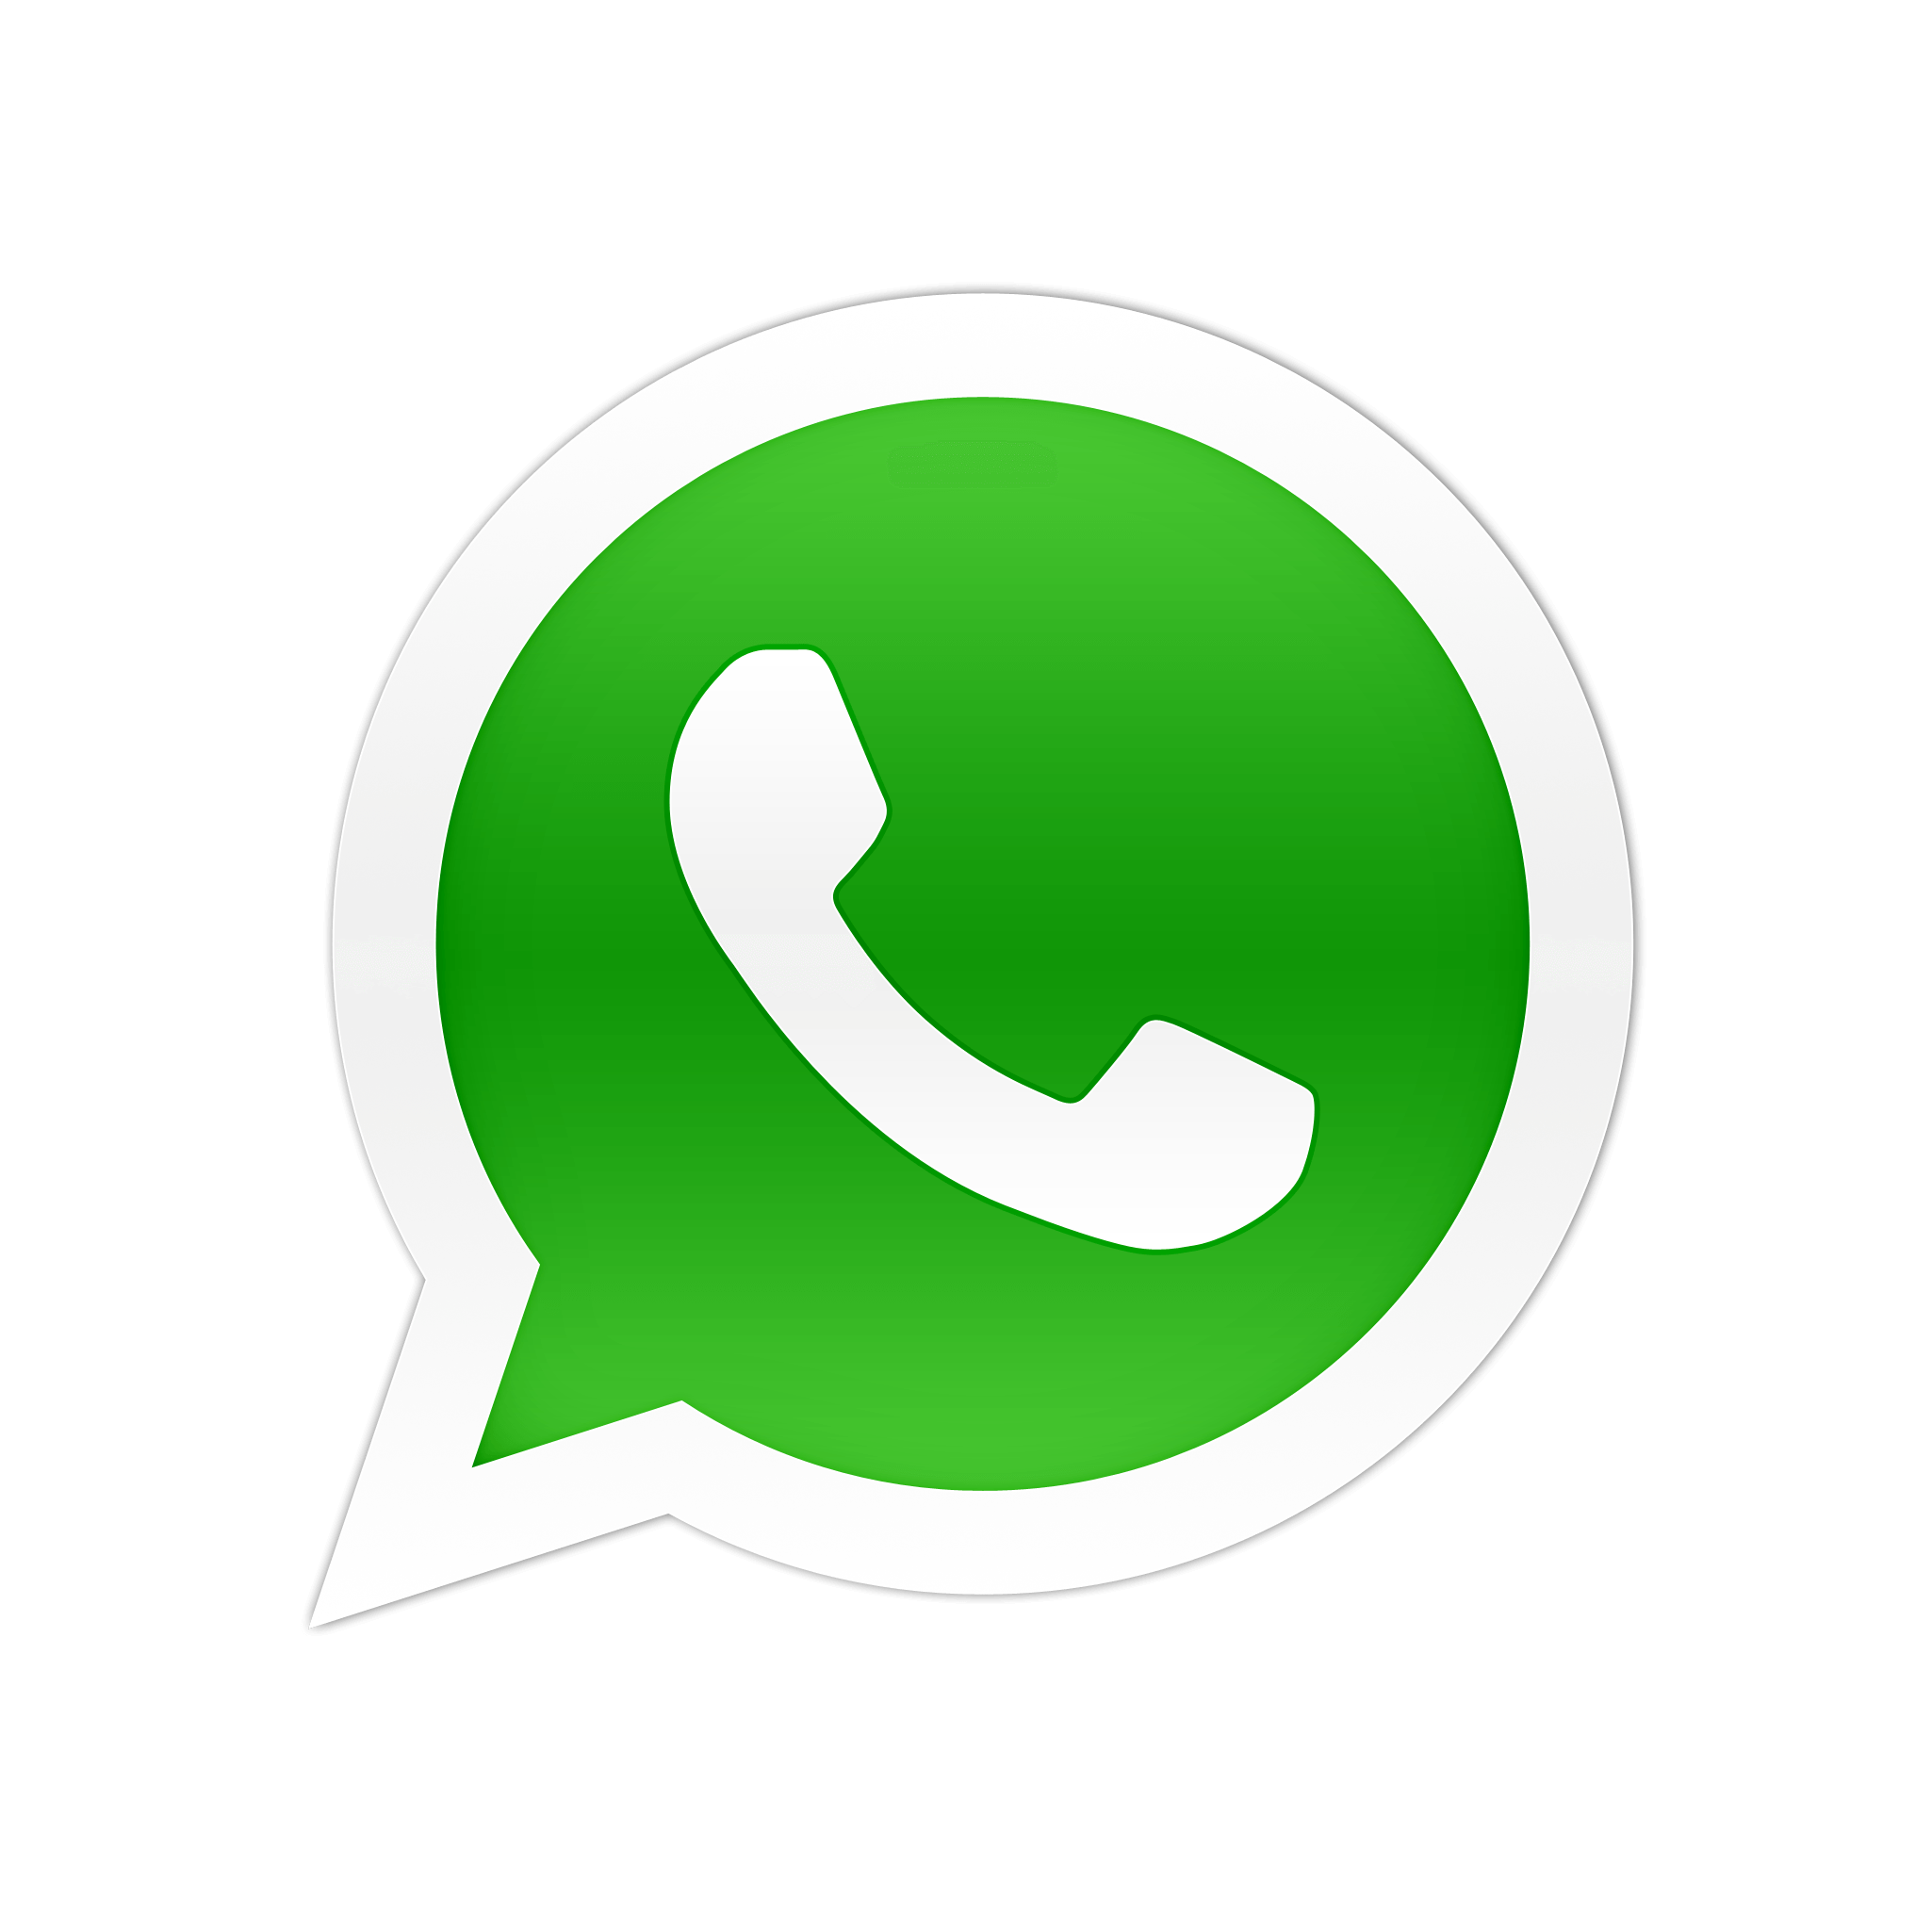 whatsapp_logo.png